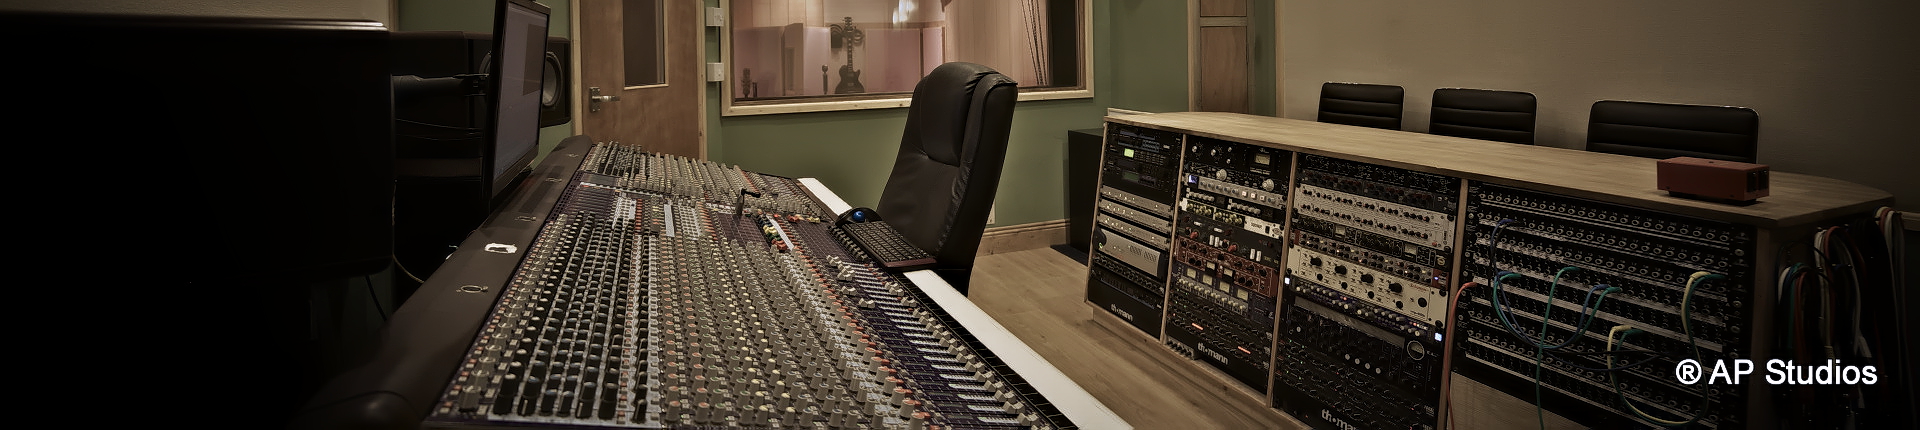 AP Recording Studios Dublin Control Room entrance view